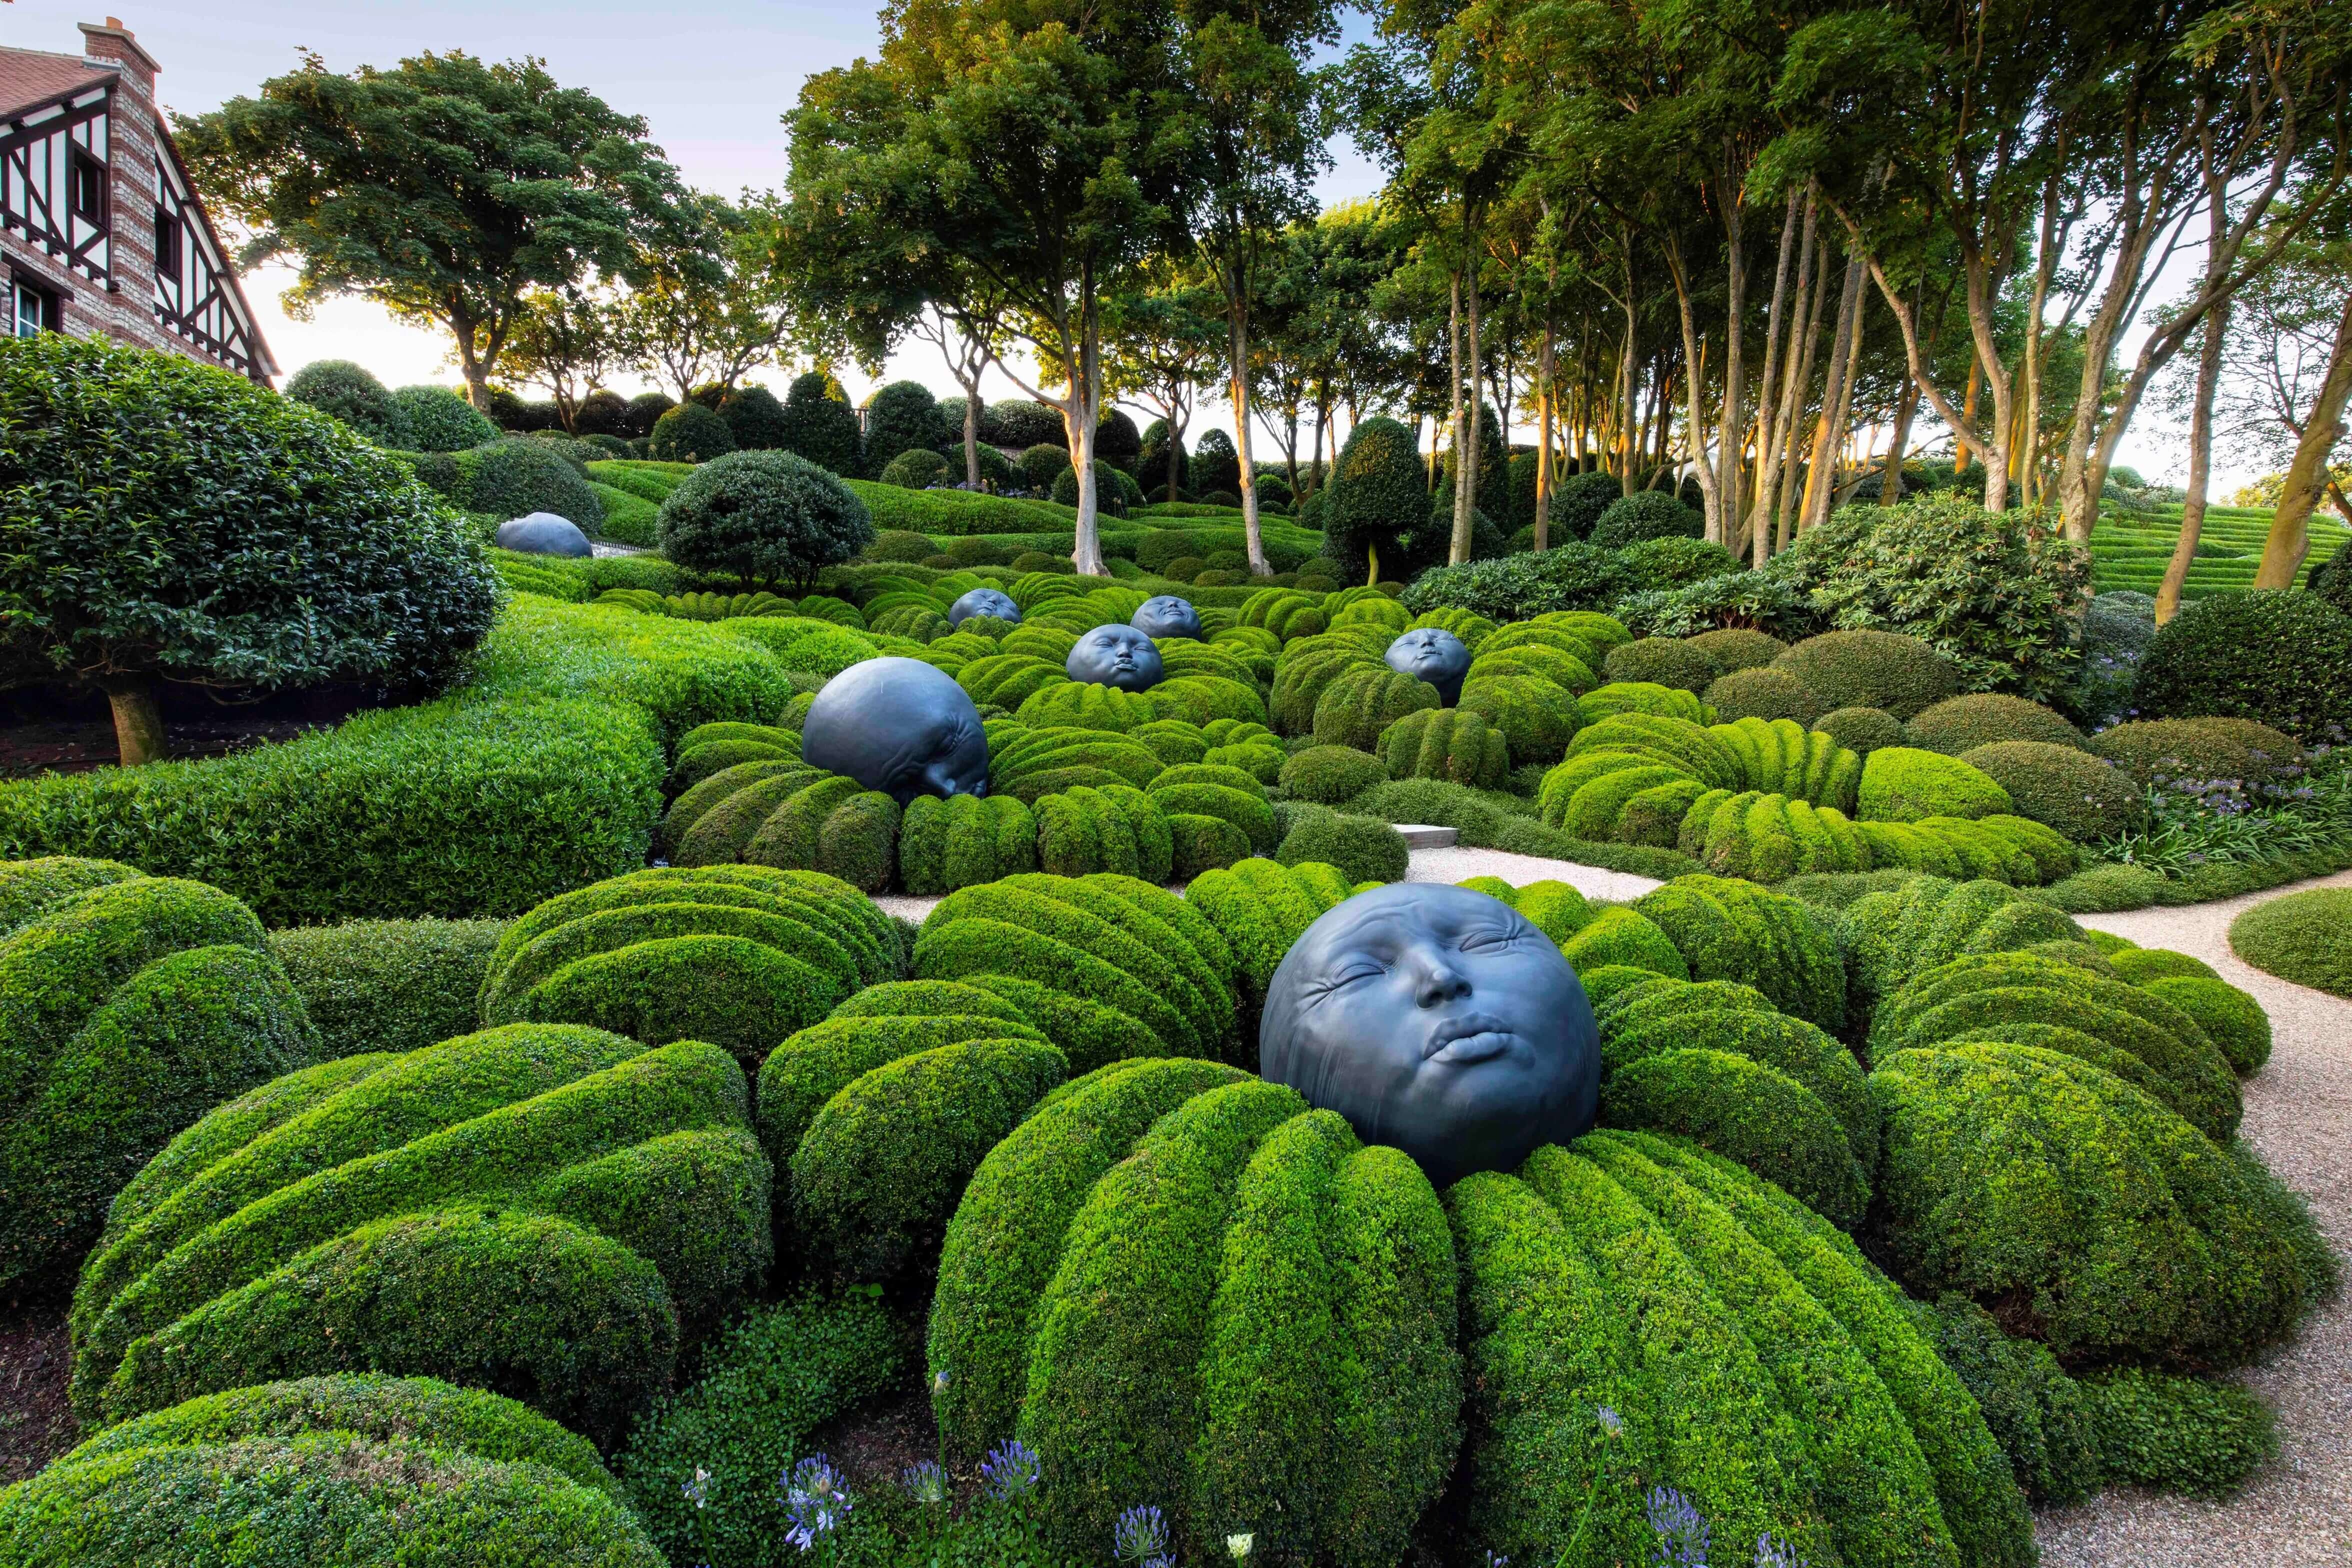 Les Jardins d’Etretat - A Natural Open-air Museum